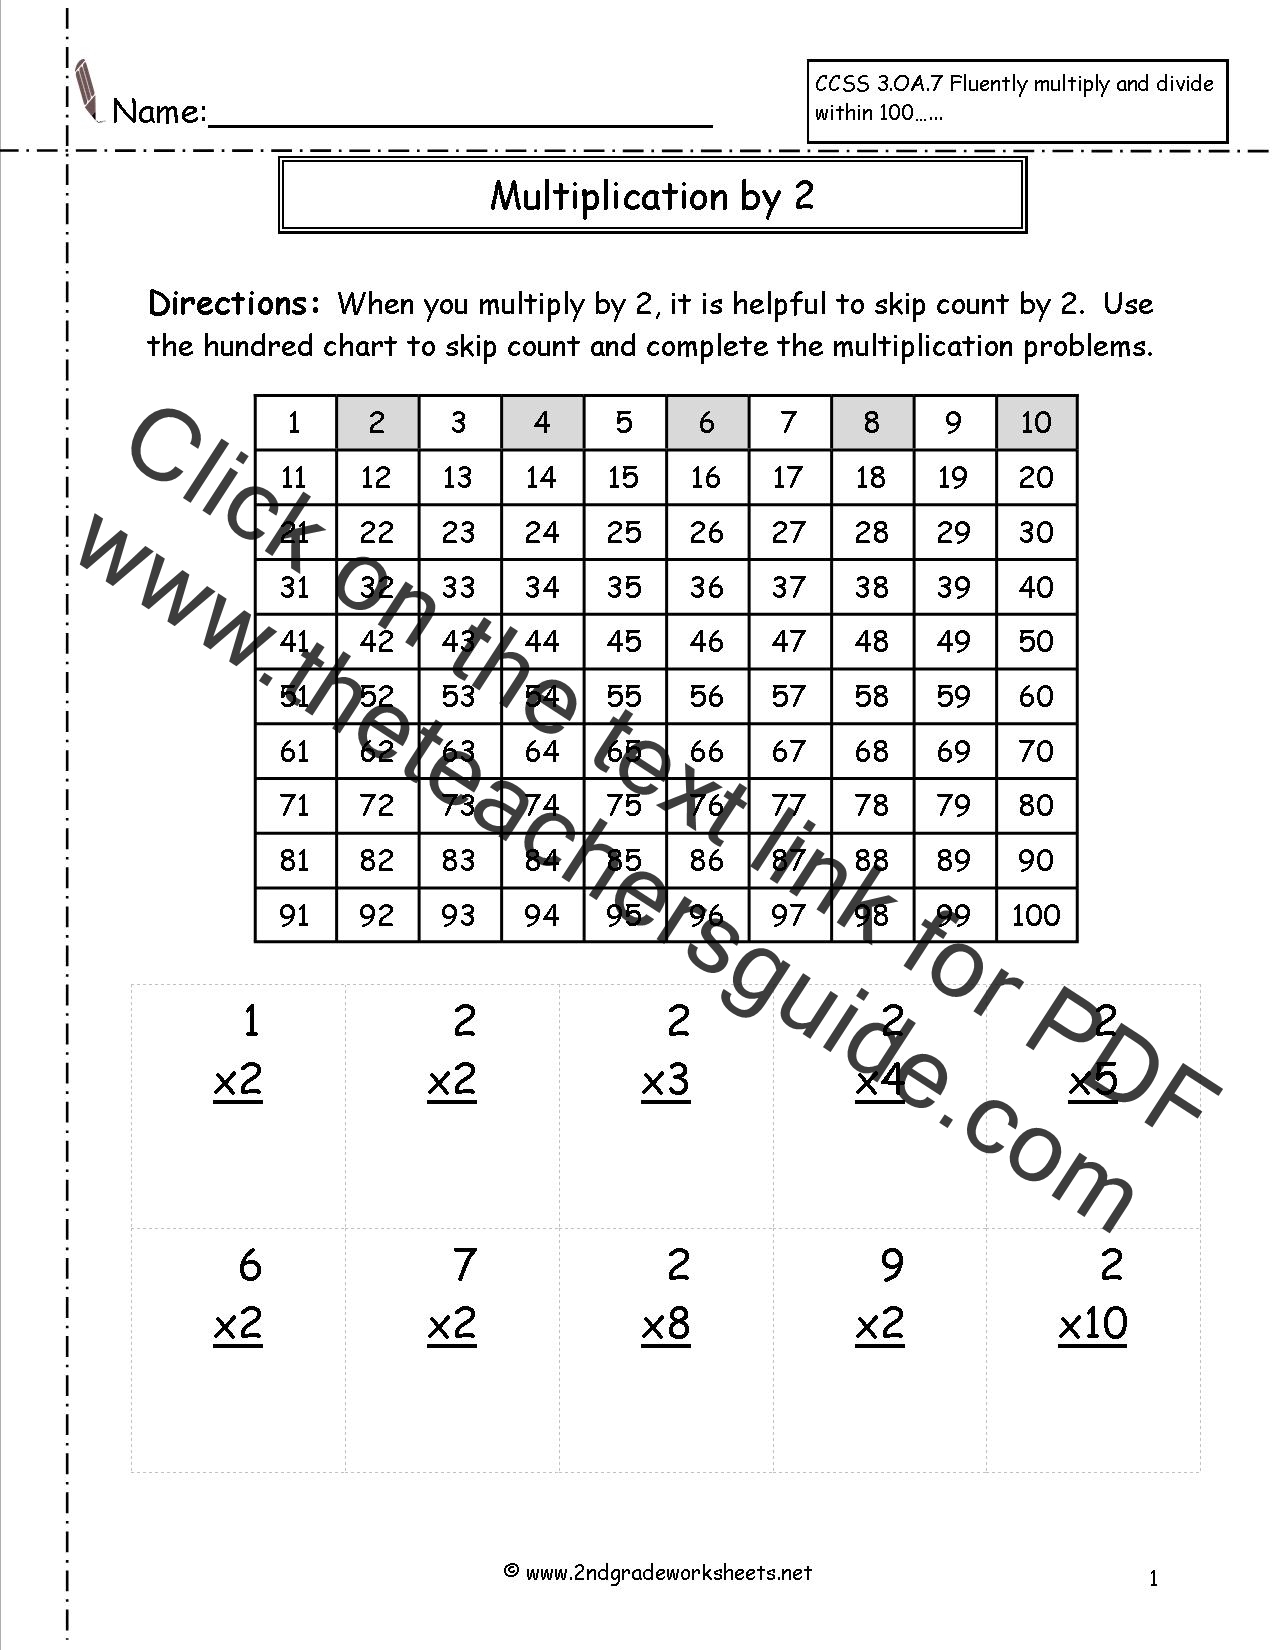 multiplication-worksheets-1-3-free-printable